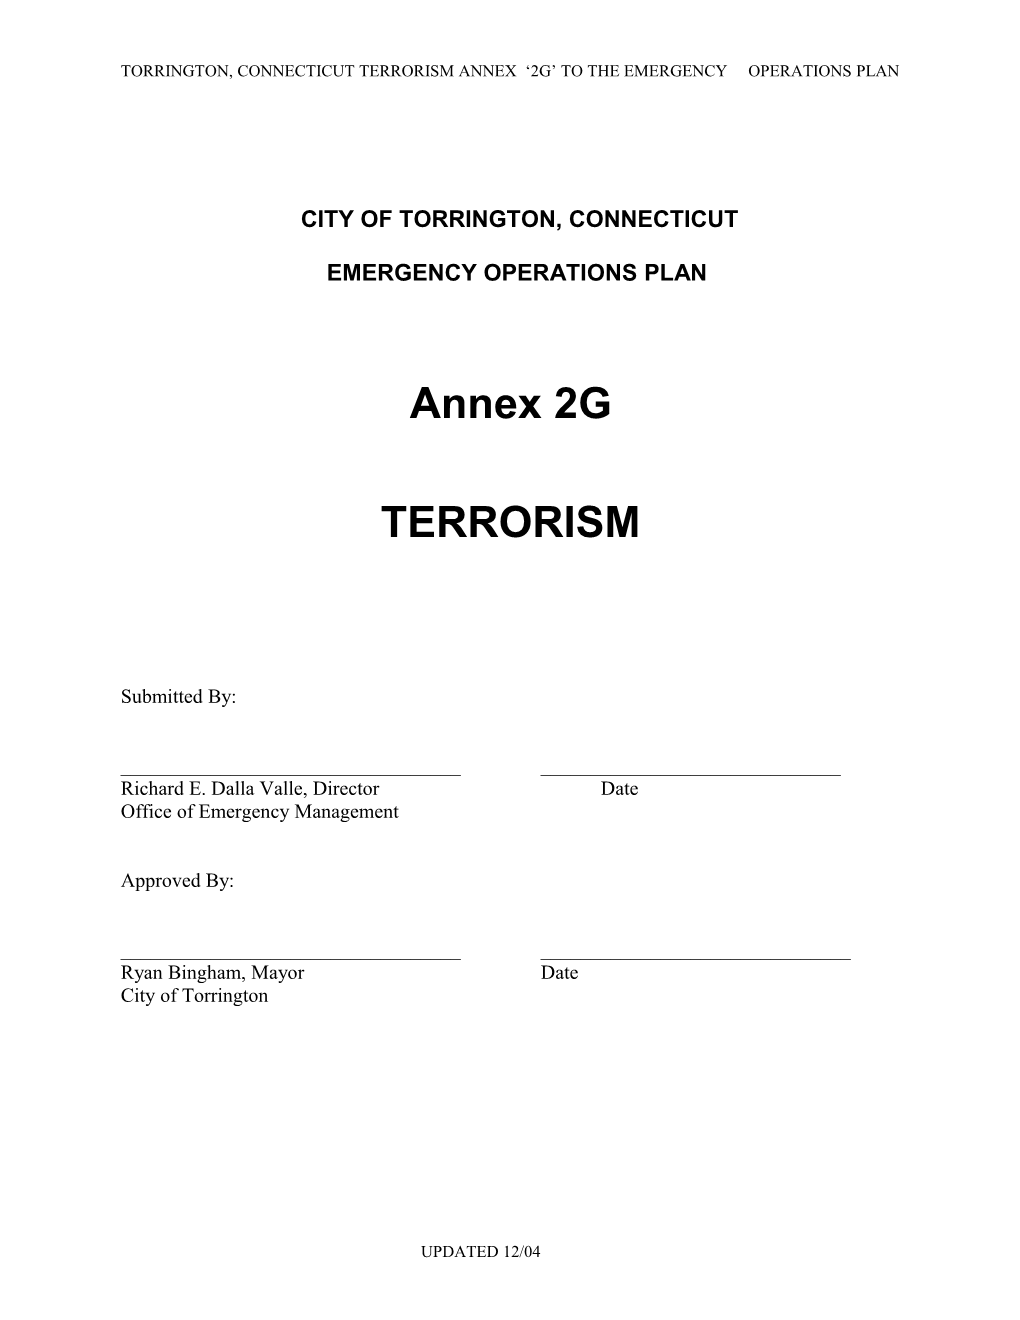 Torrington, Connecticut Terrorism Annex 2G to the Emergency Operations Plan